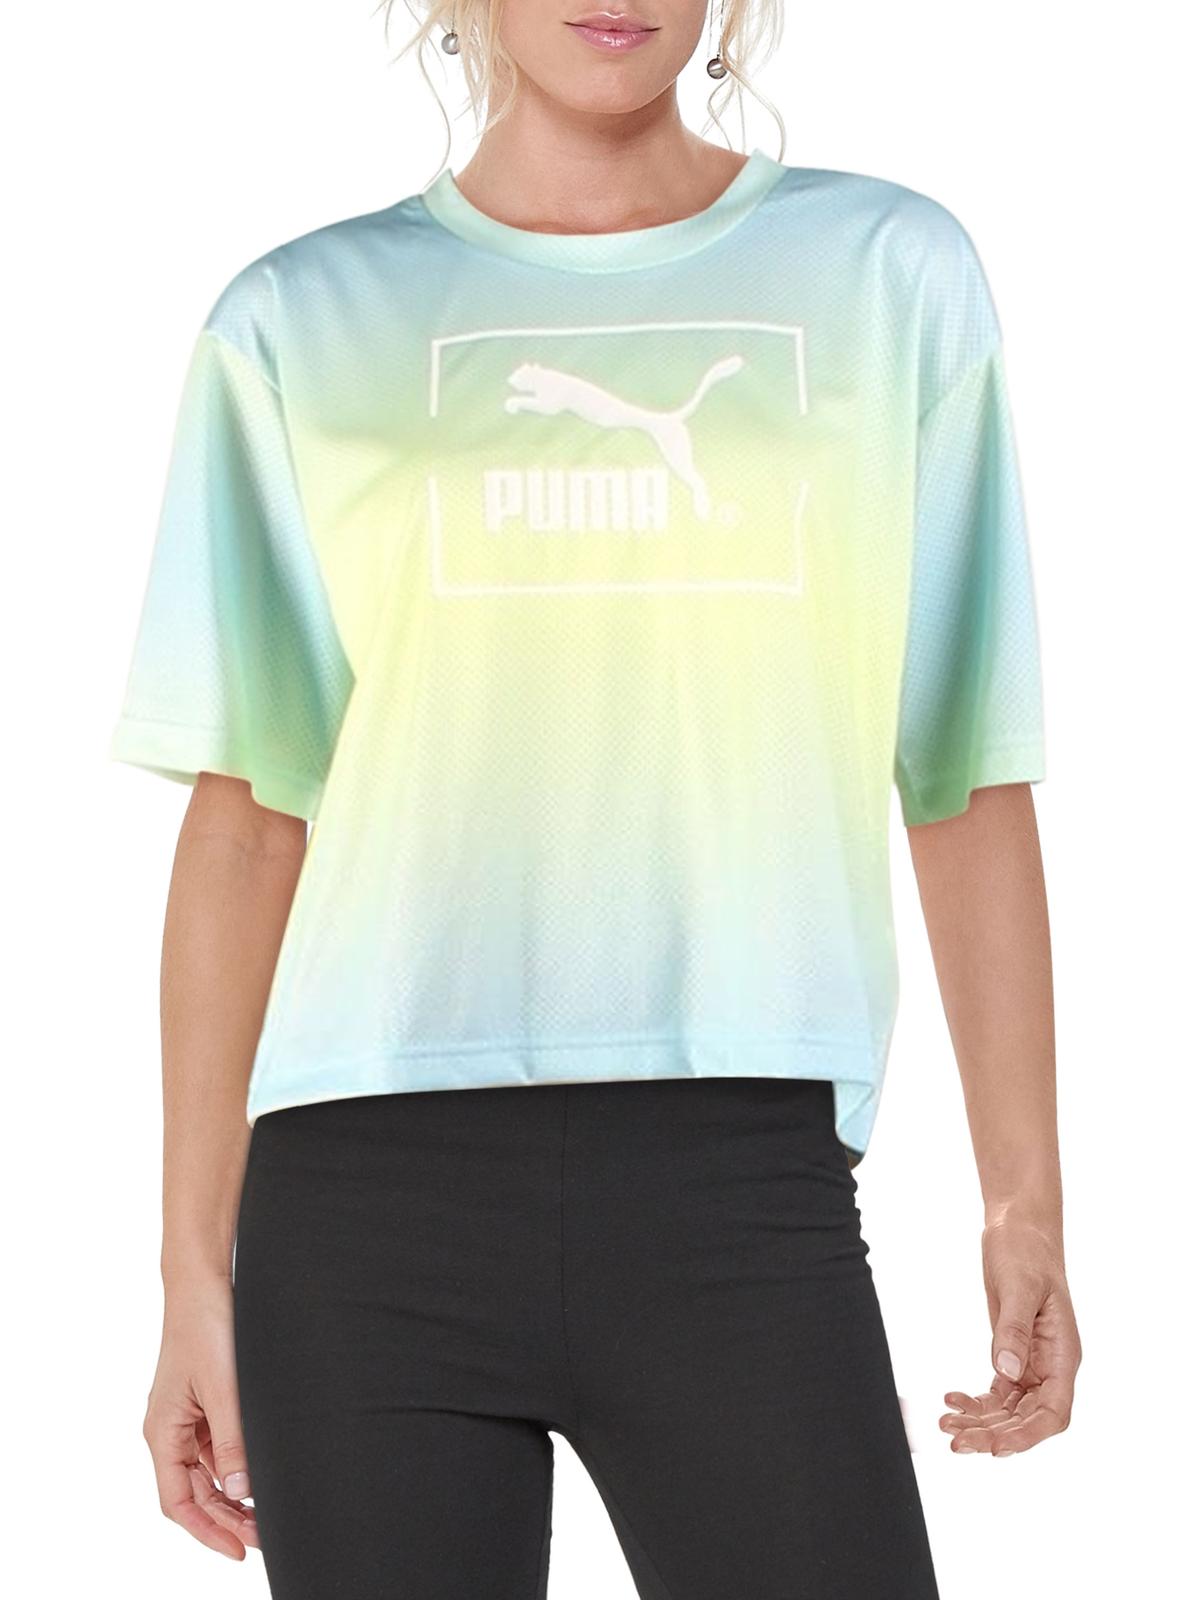 Puma Womens Fitness Yoga T-Shirt - image 1 of 2